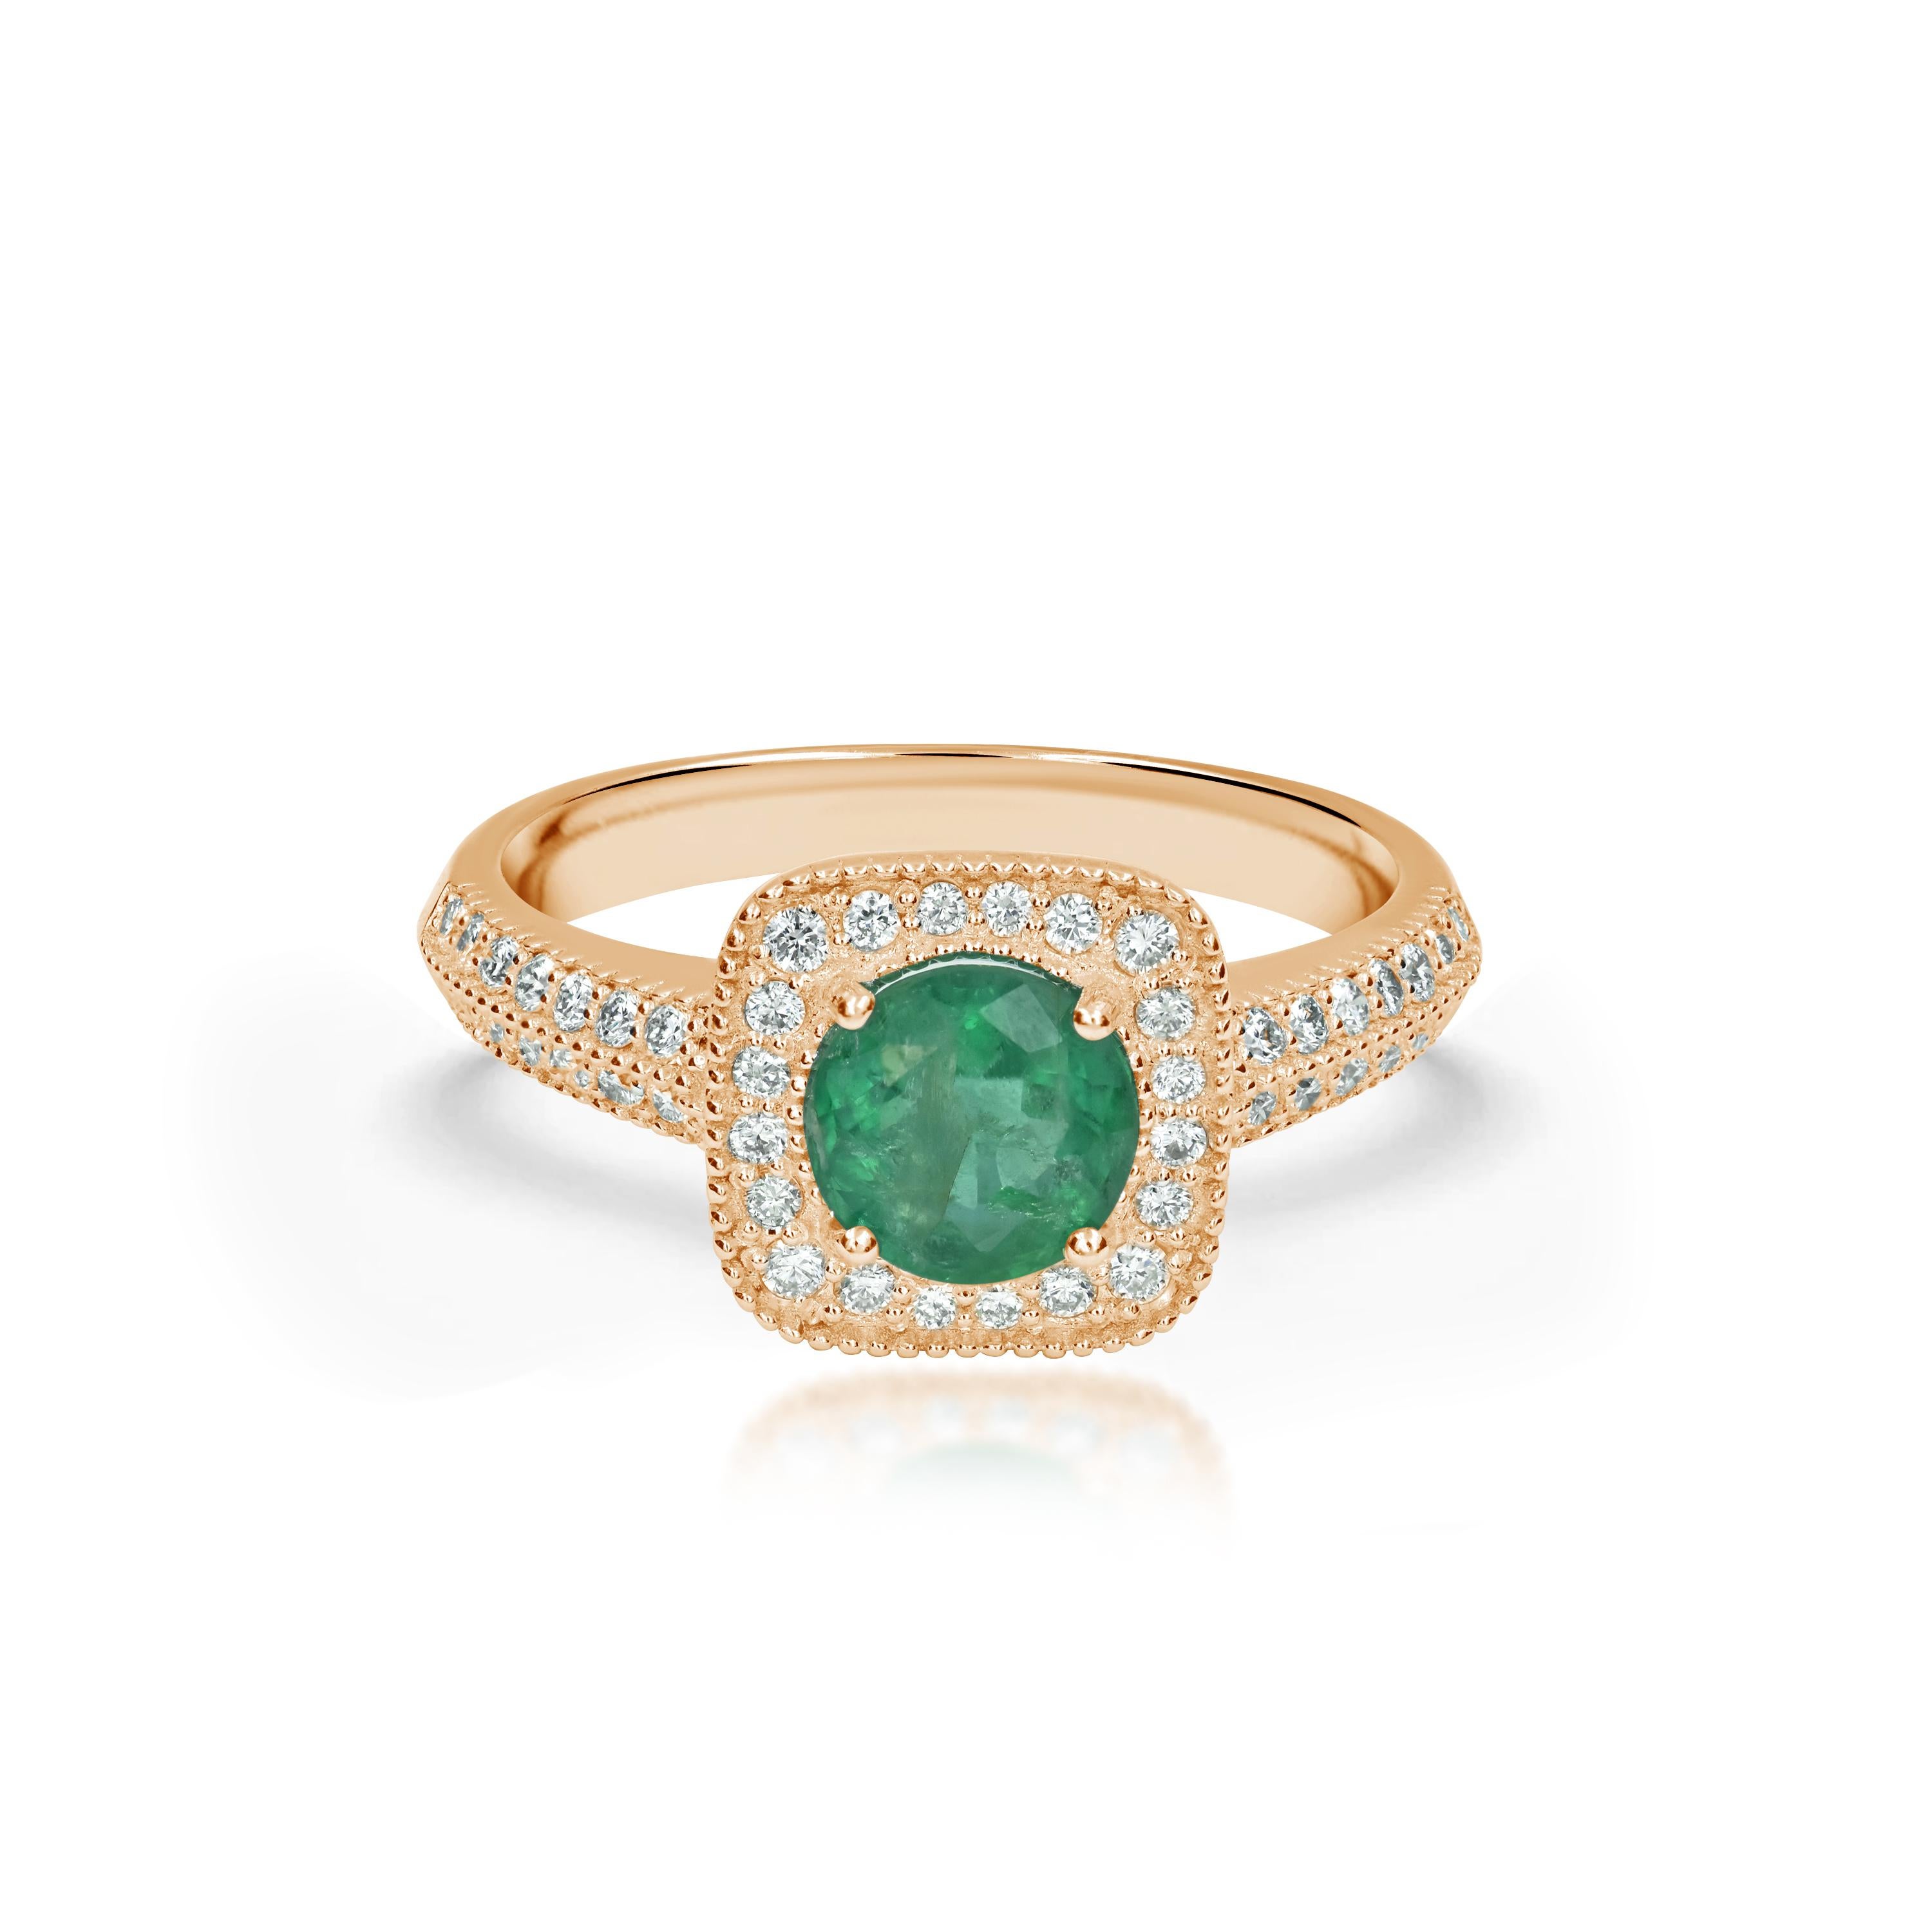 18k Ring White Gold Ring Diamond Ring  Emerald  Ring Emerald Round Ring  
   18k Solid White gold halo ring. Round shape intense color Zambian emerald, extraordinary gemstone ring adorned by brilliant diamonds micro pave halo setting.

